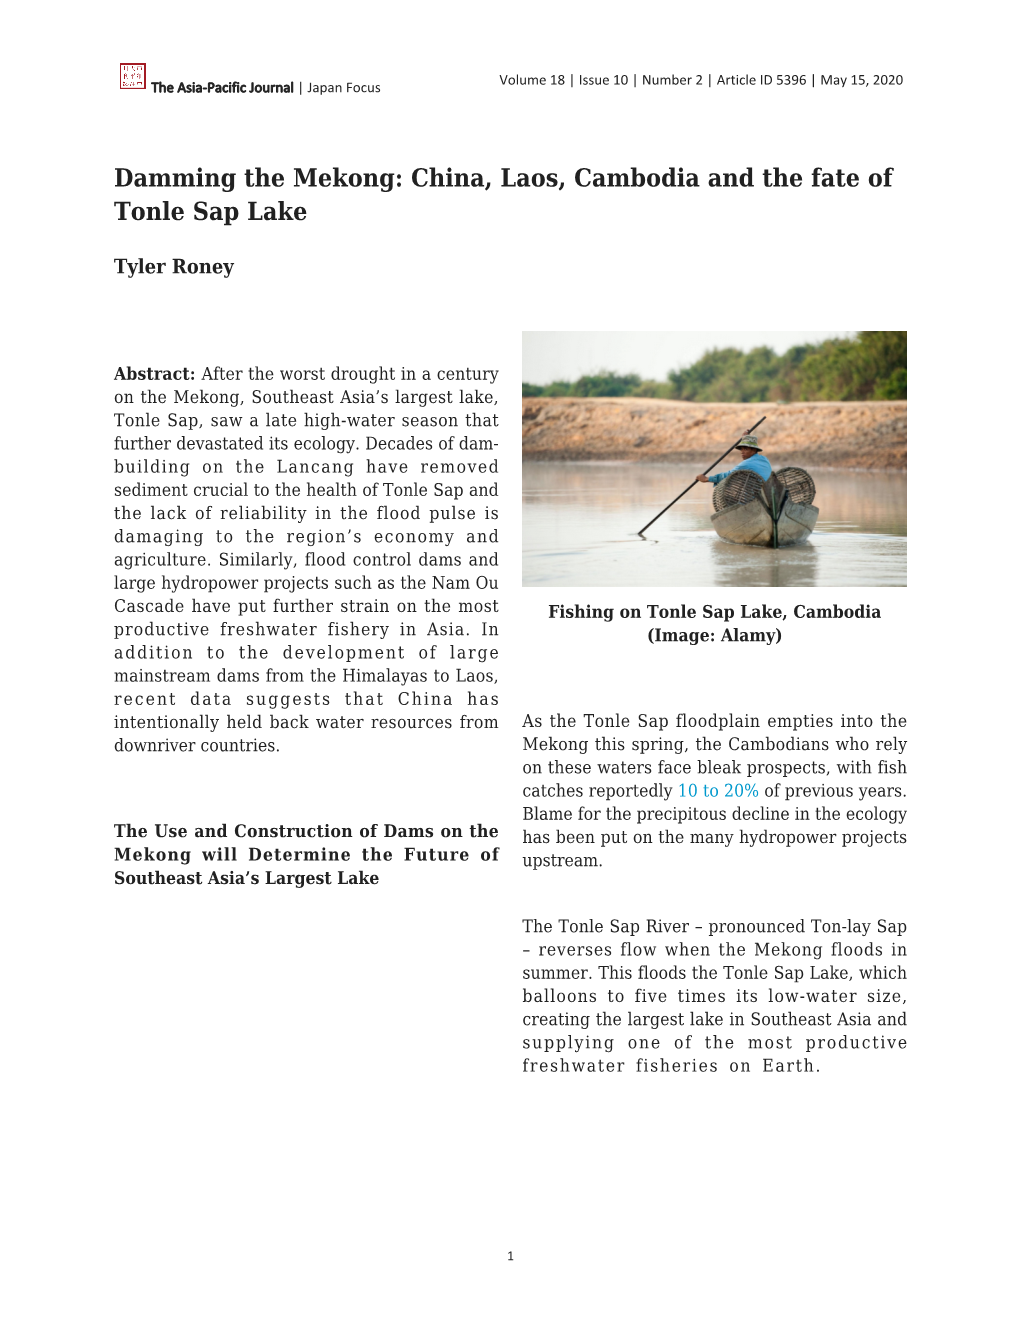 China, Laos, Cambodia and the Fate of Tonle Sap Lake